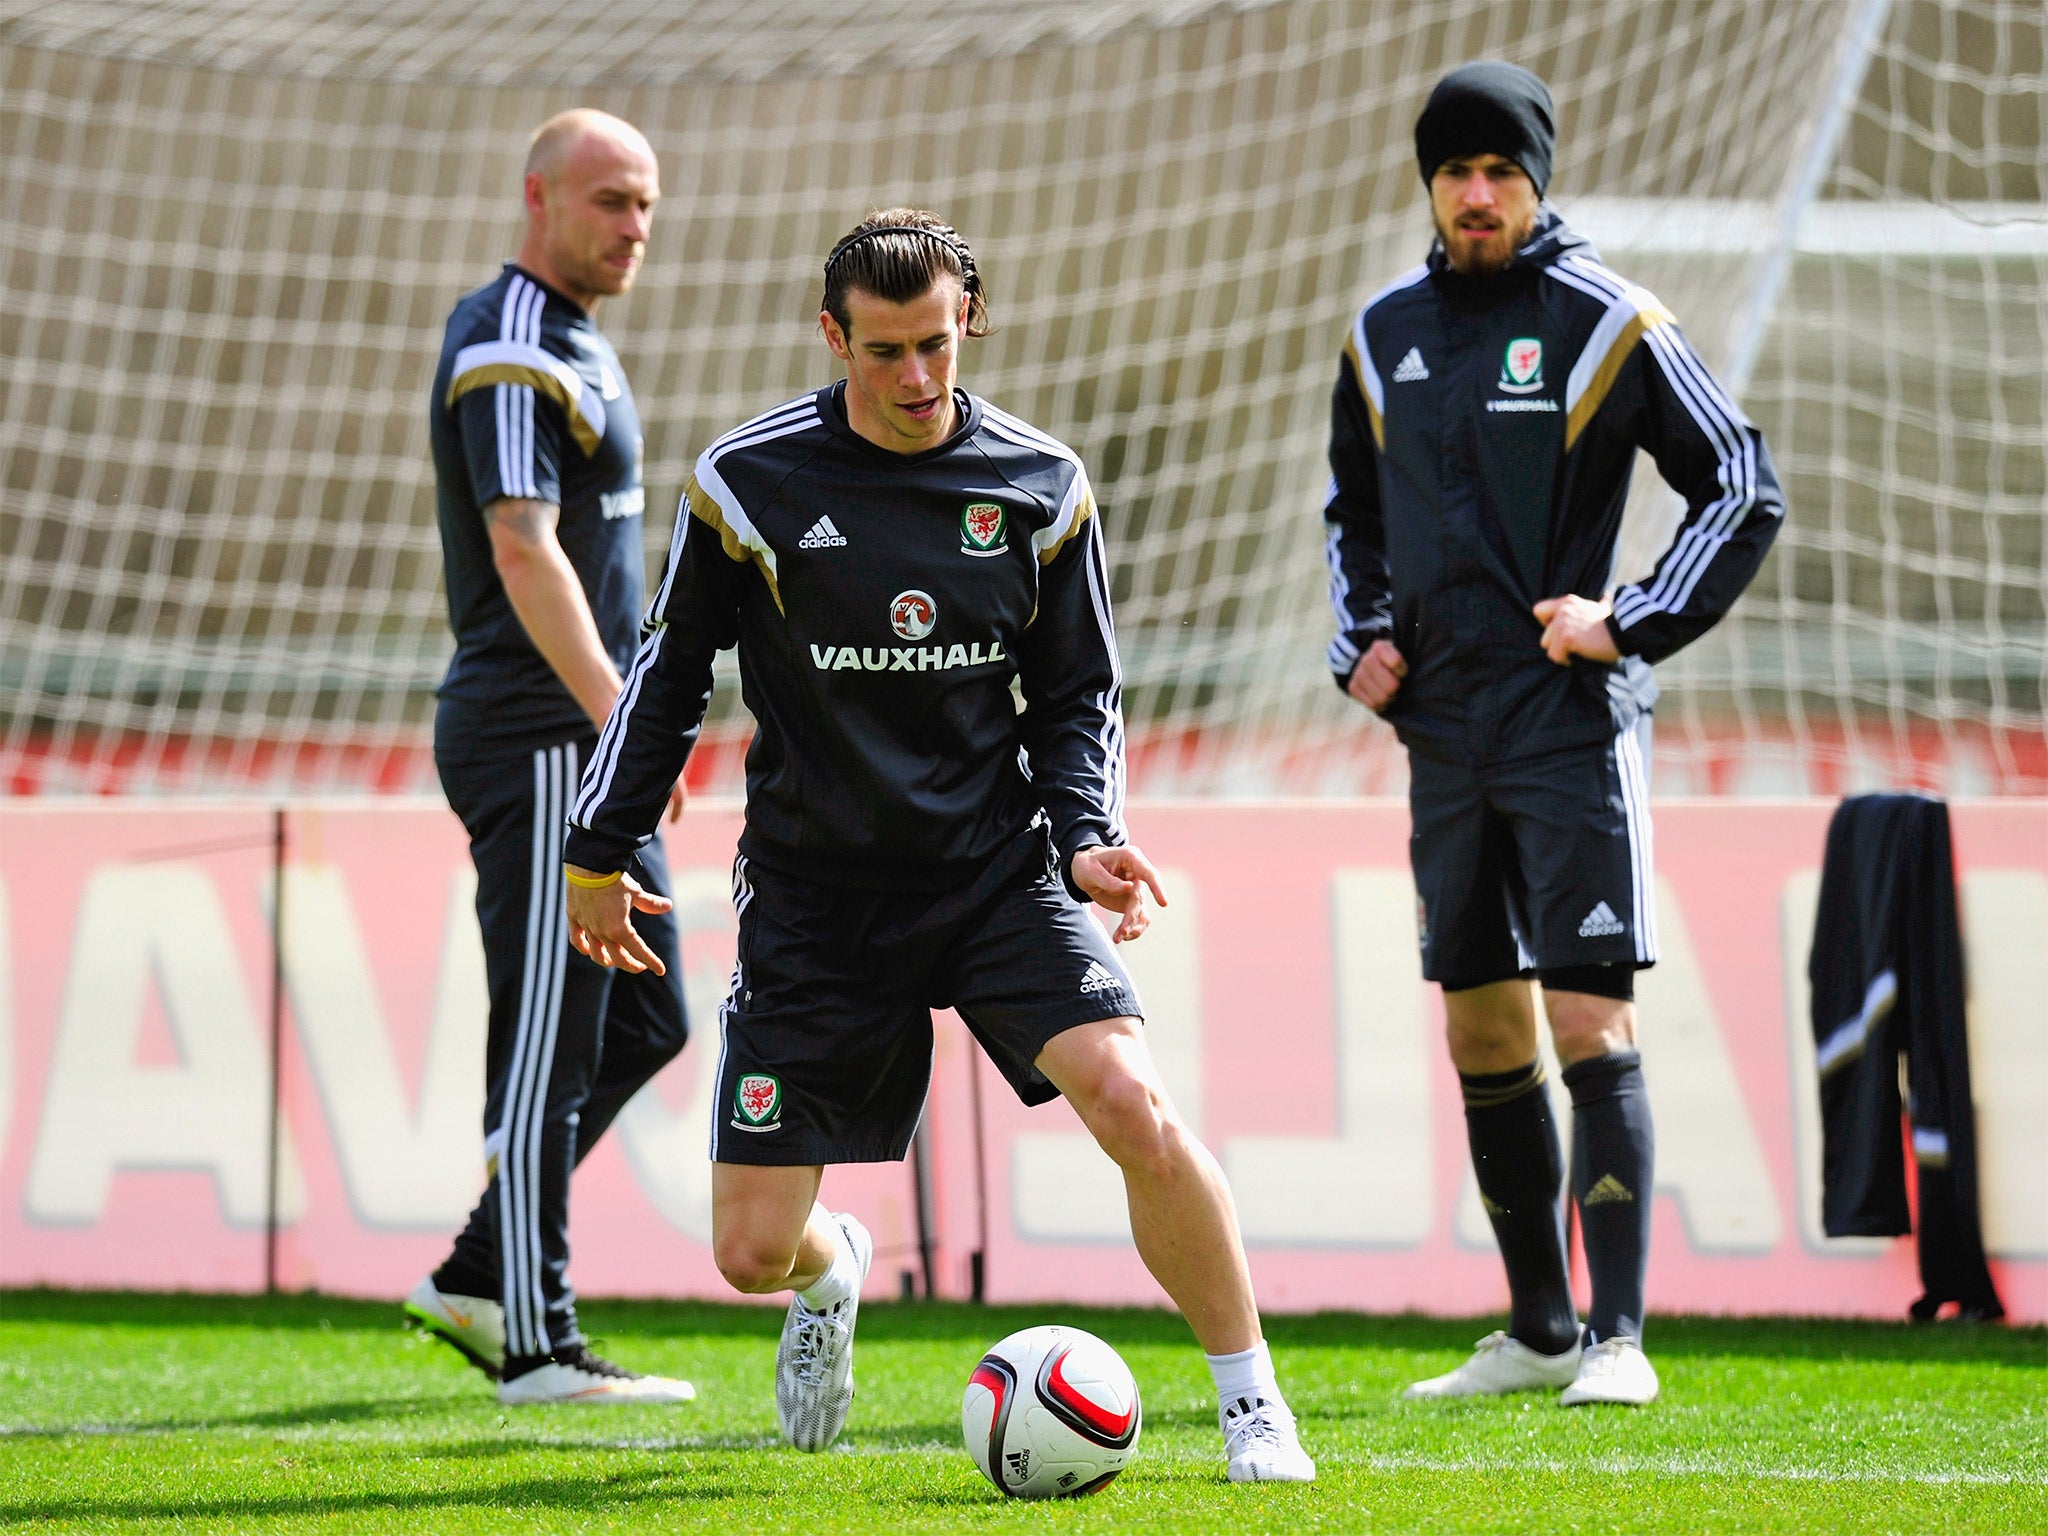 Gareth Bale training ahead of Saturday’s game against Israel